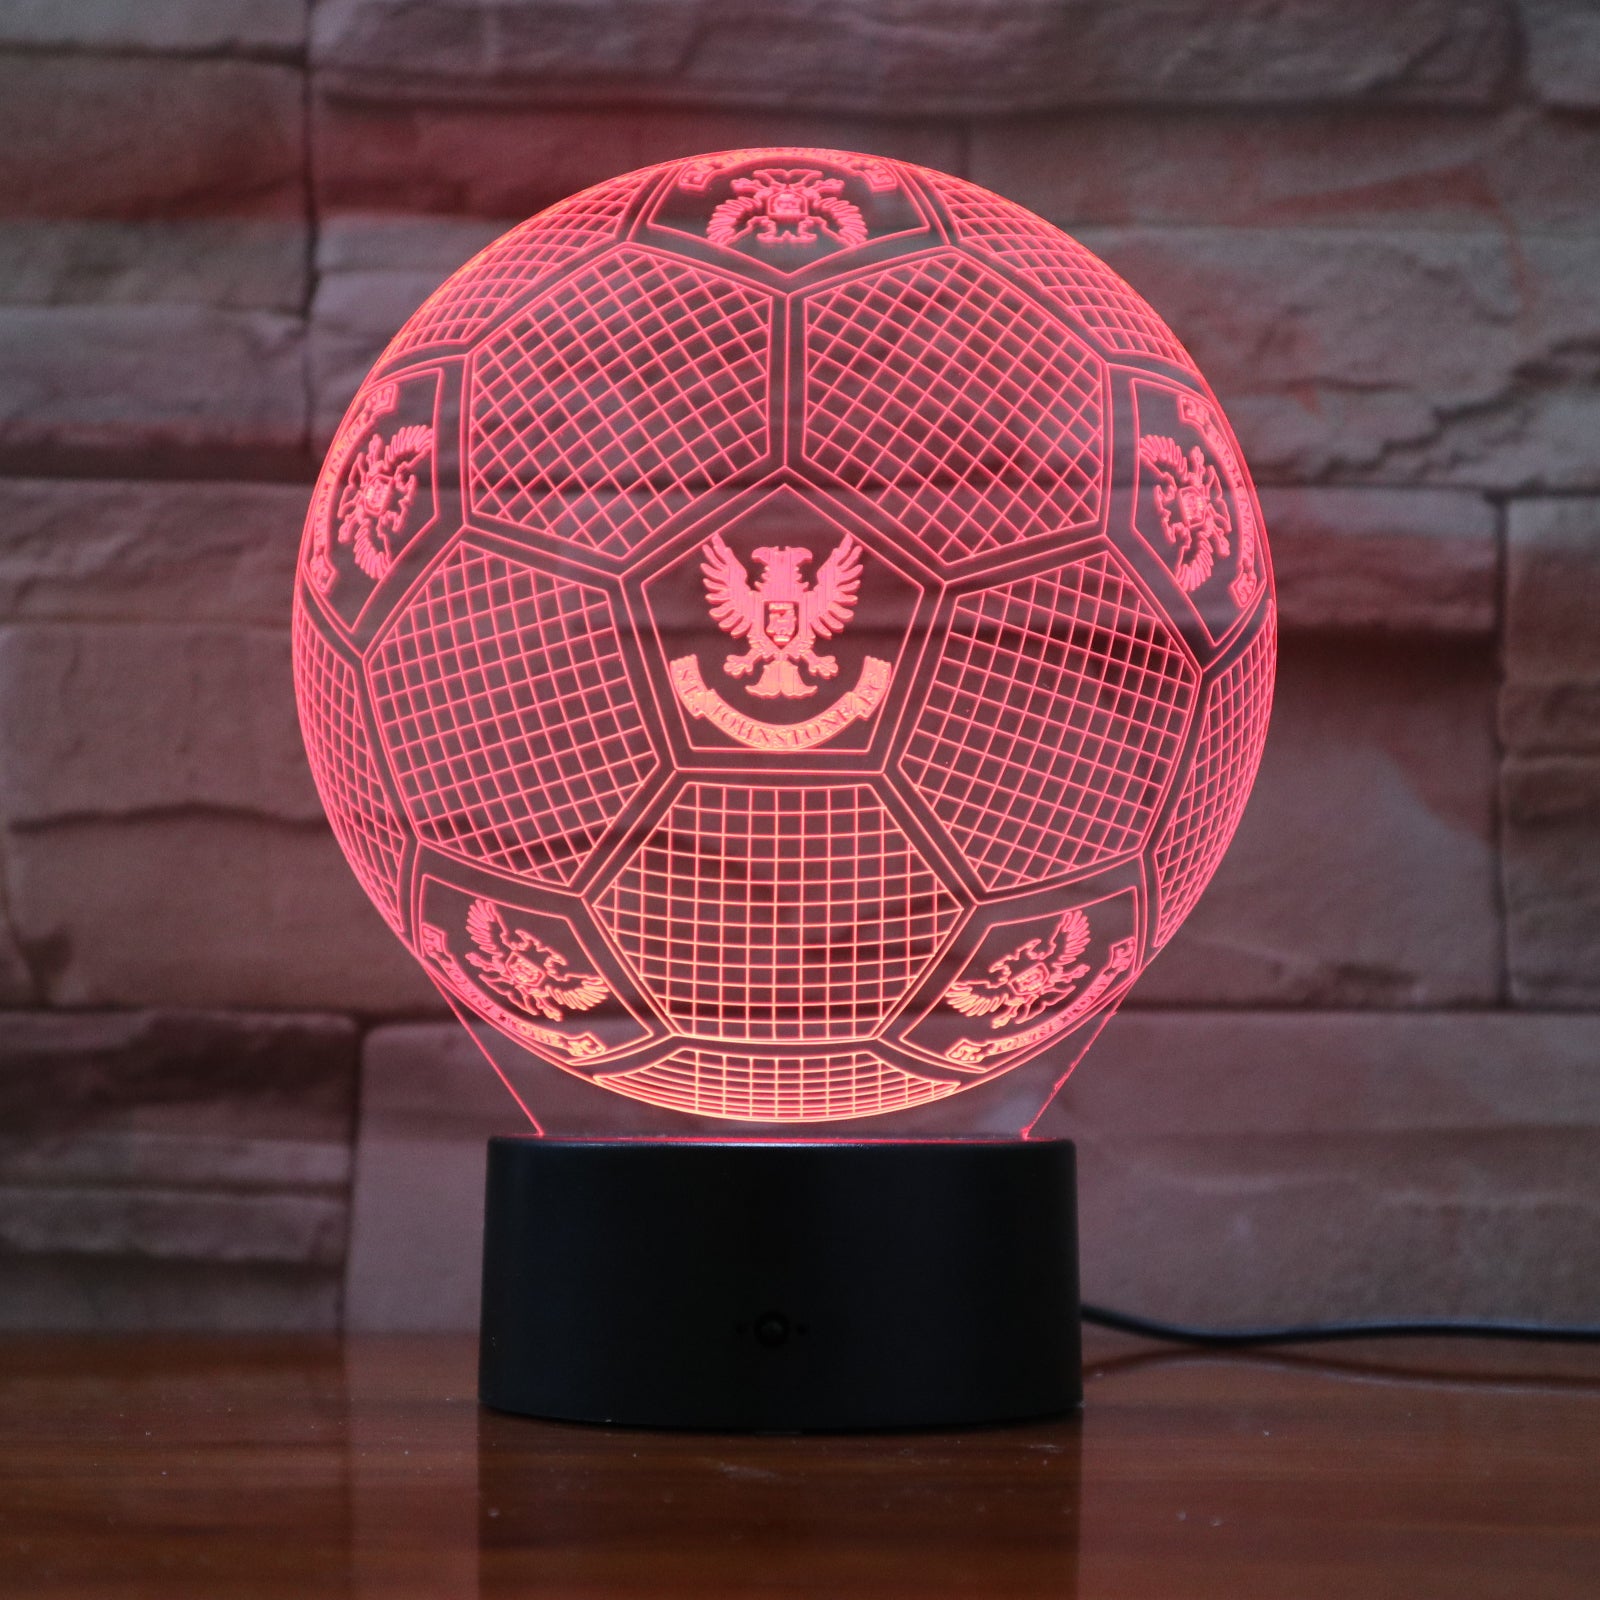 Football 19 - 3D Optical Illusion LED Lamp Hologram